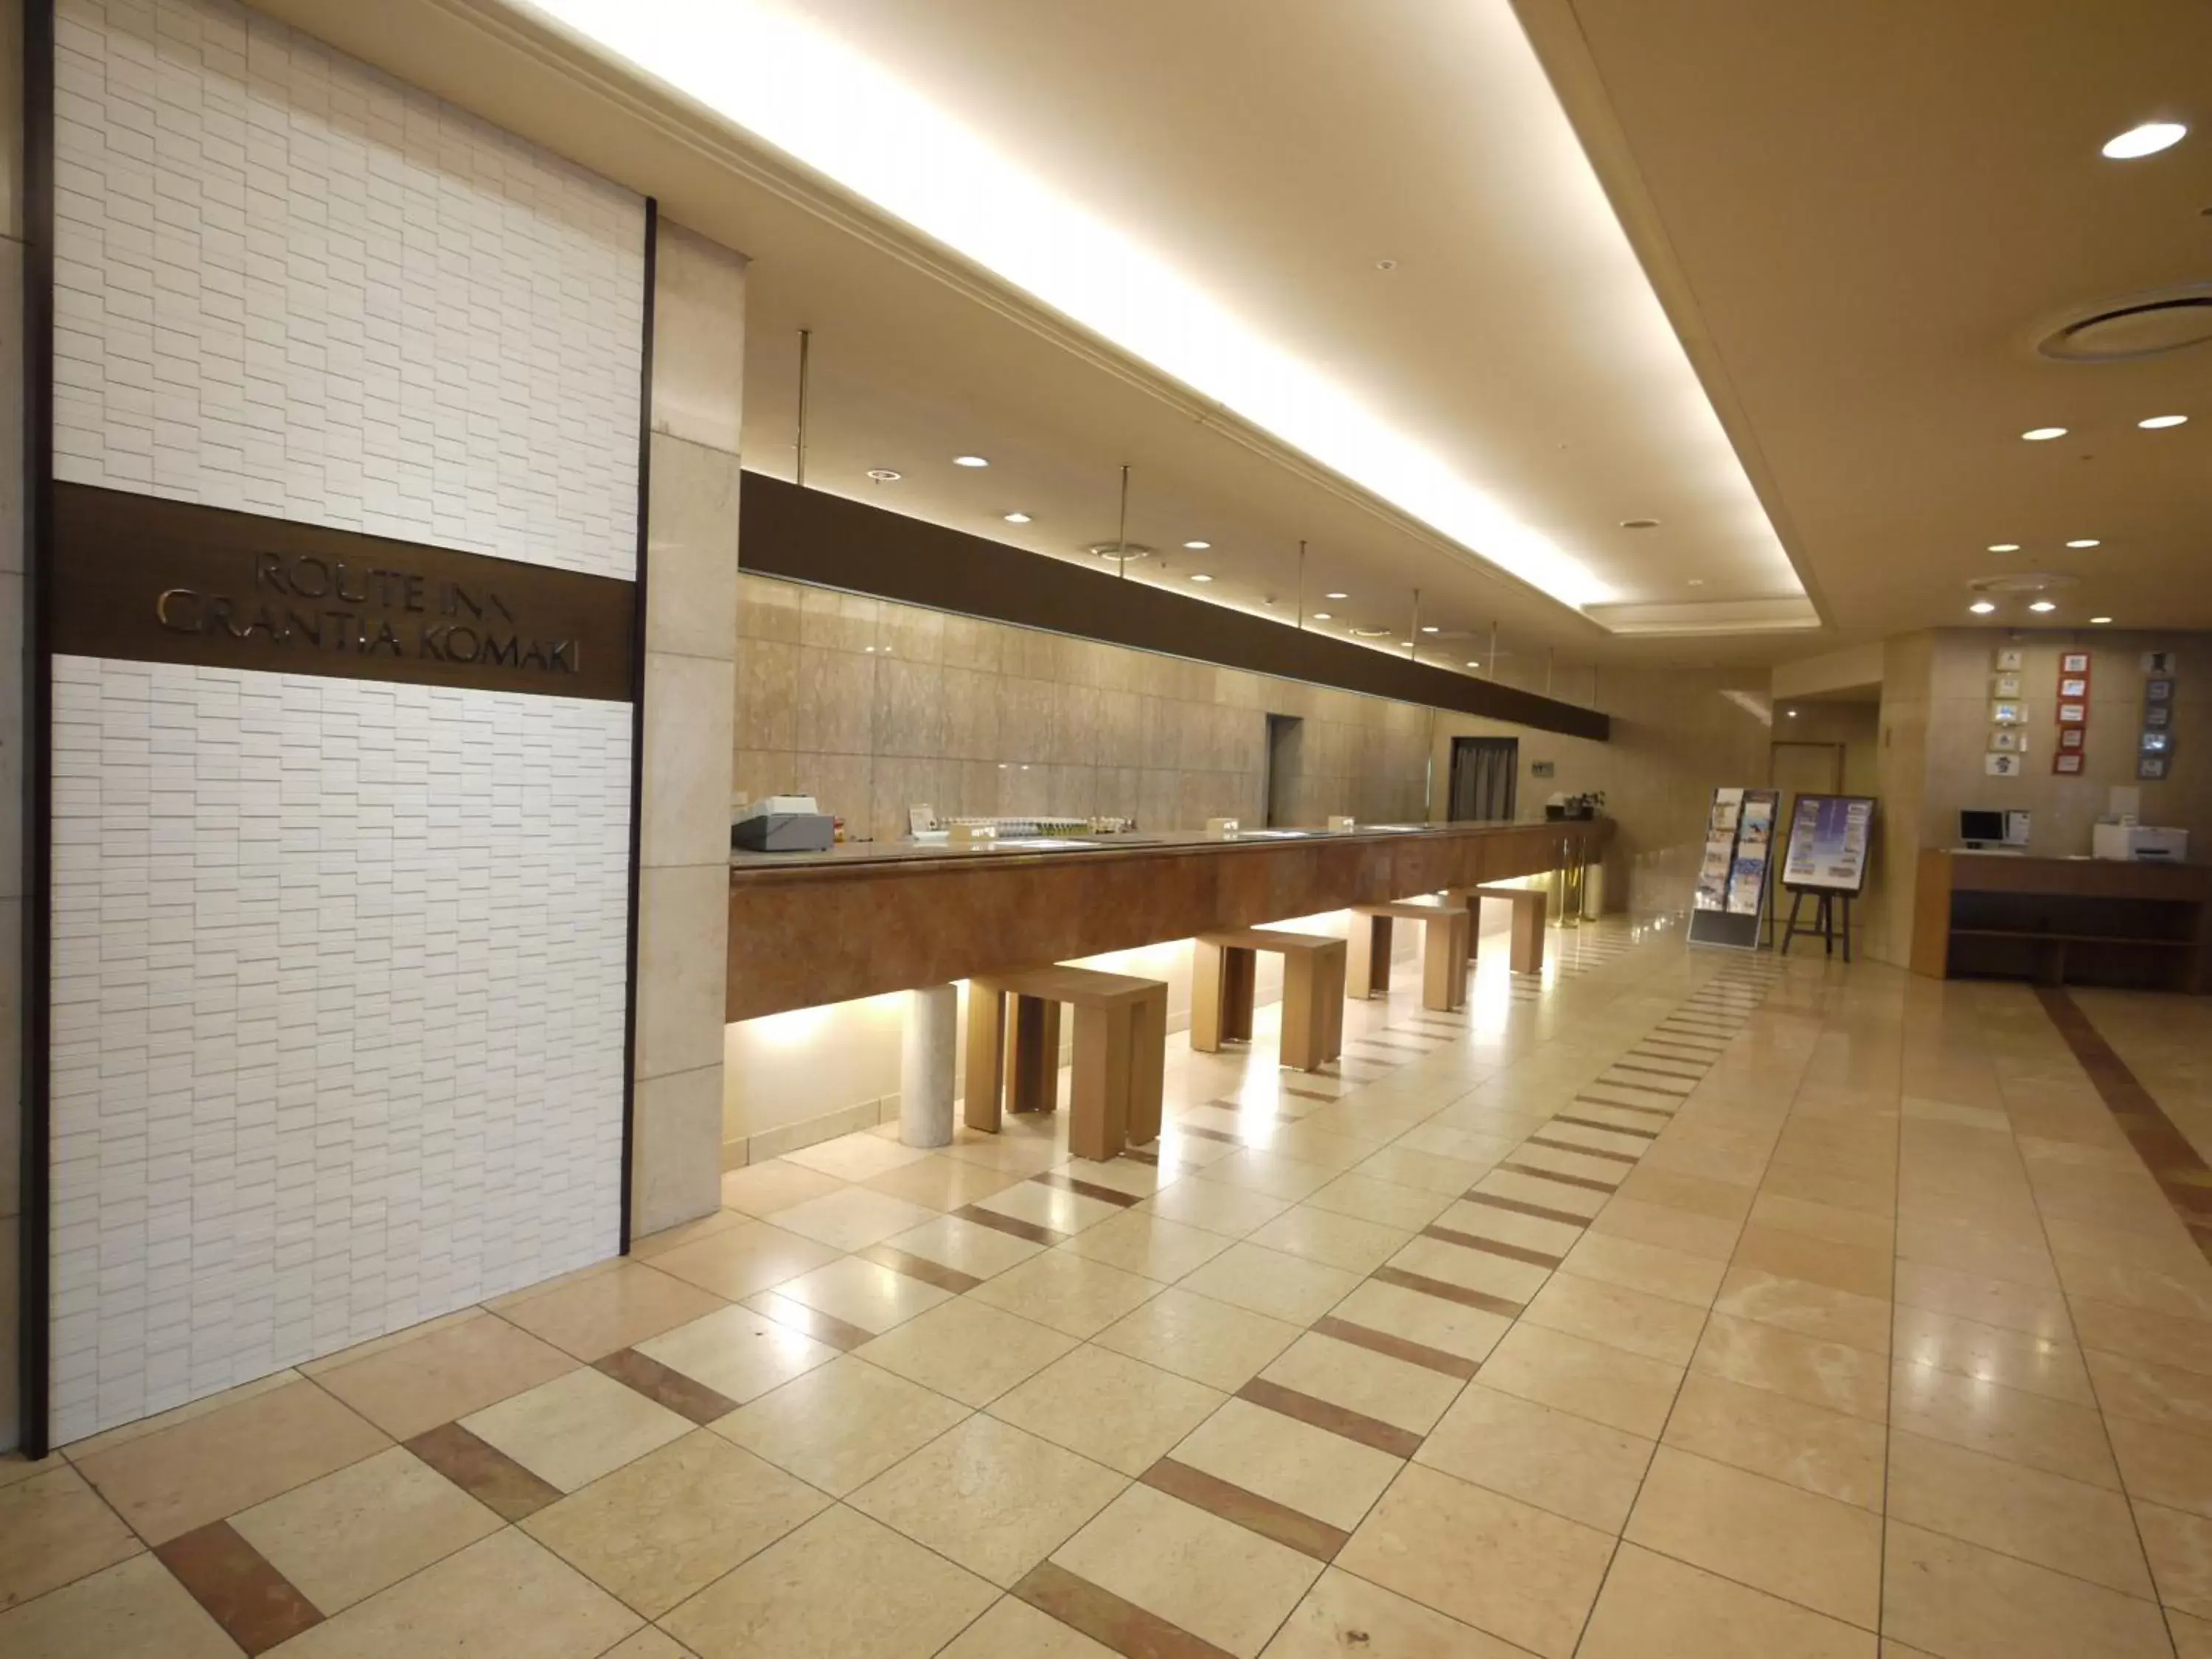 Lobby or reception, Lobby/Reception in Route Inn Grantia Komaki